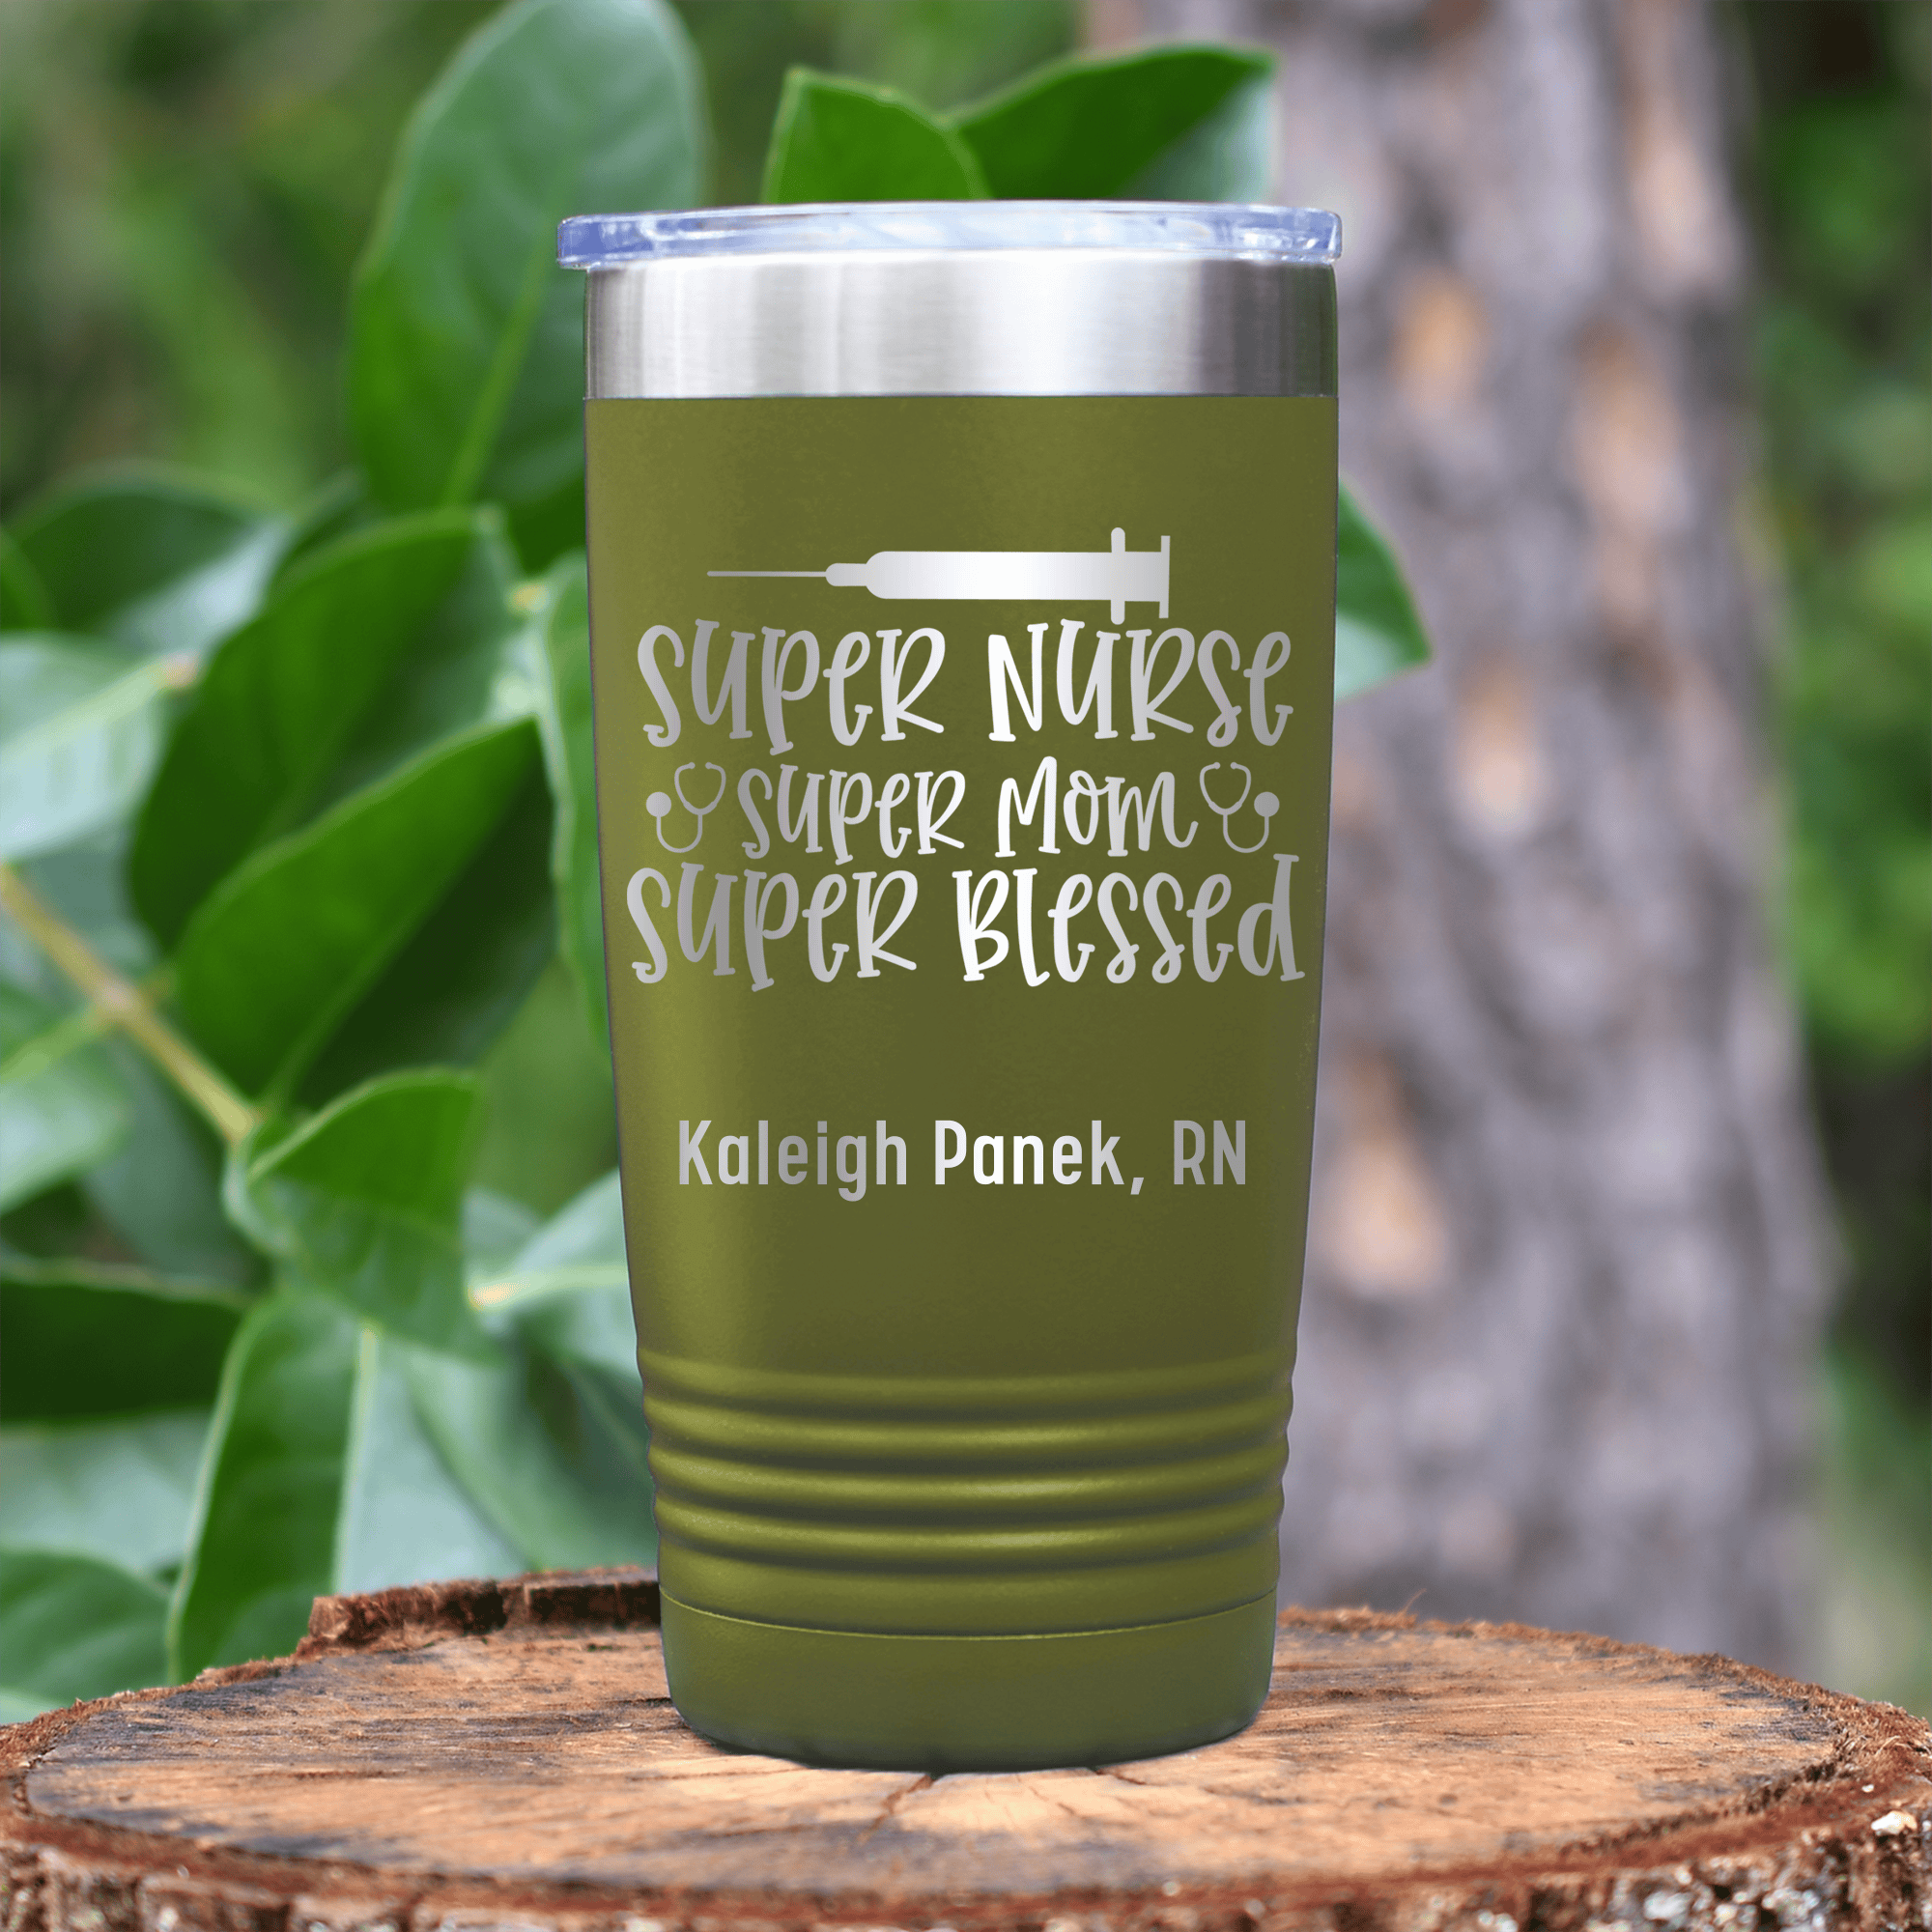 Military Green Nurse Tumbler With Super Nurse Super Blessed Design